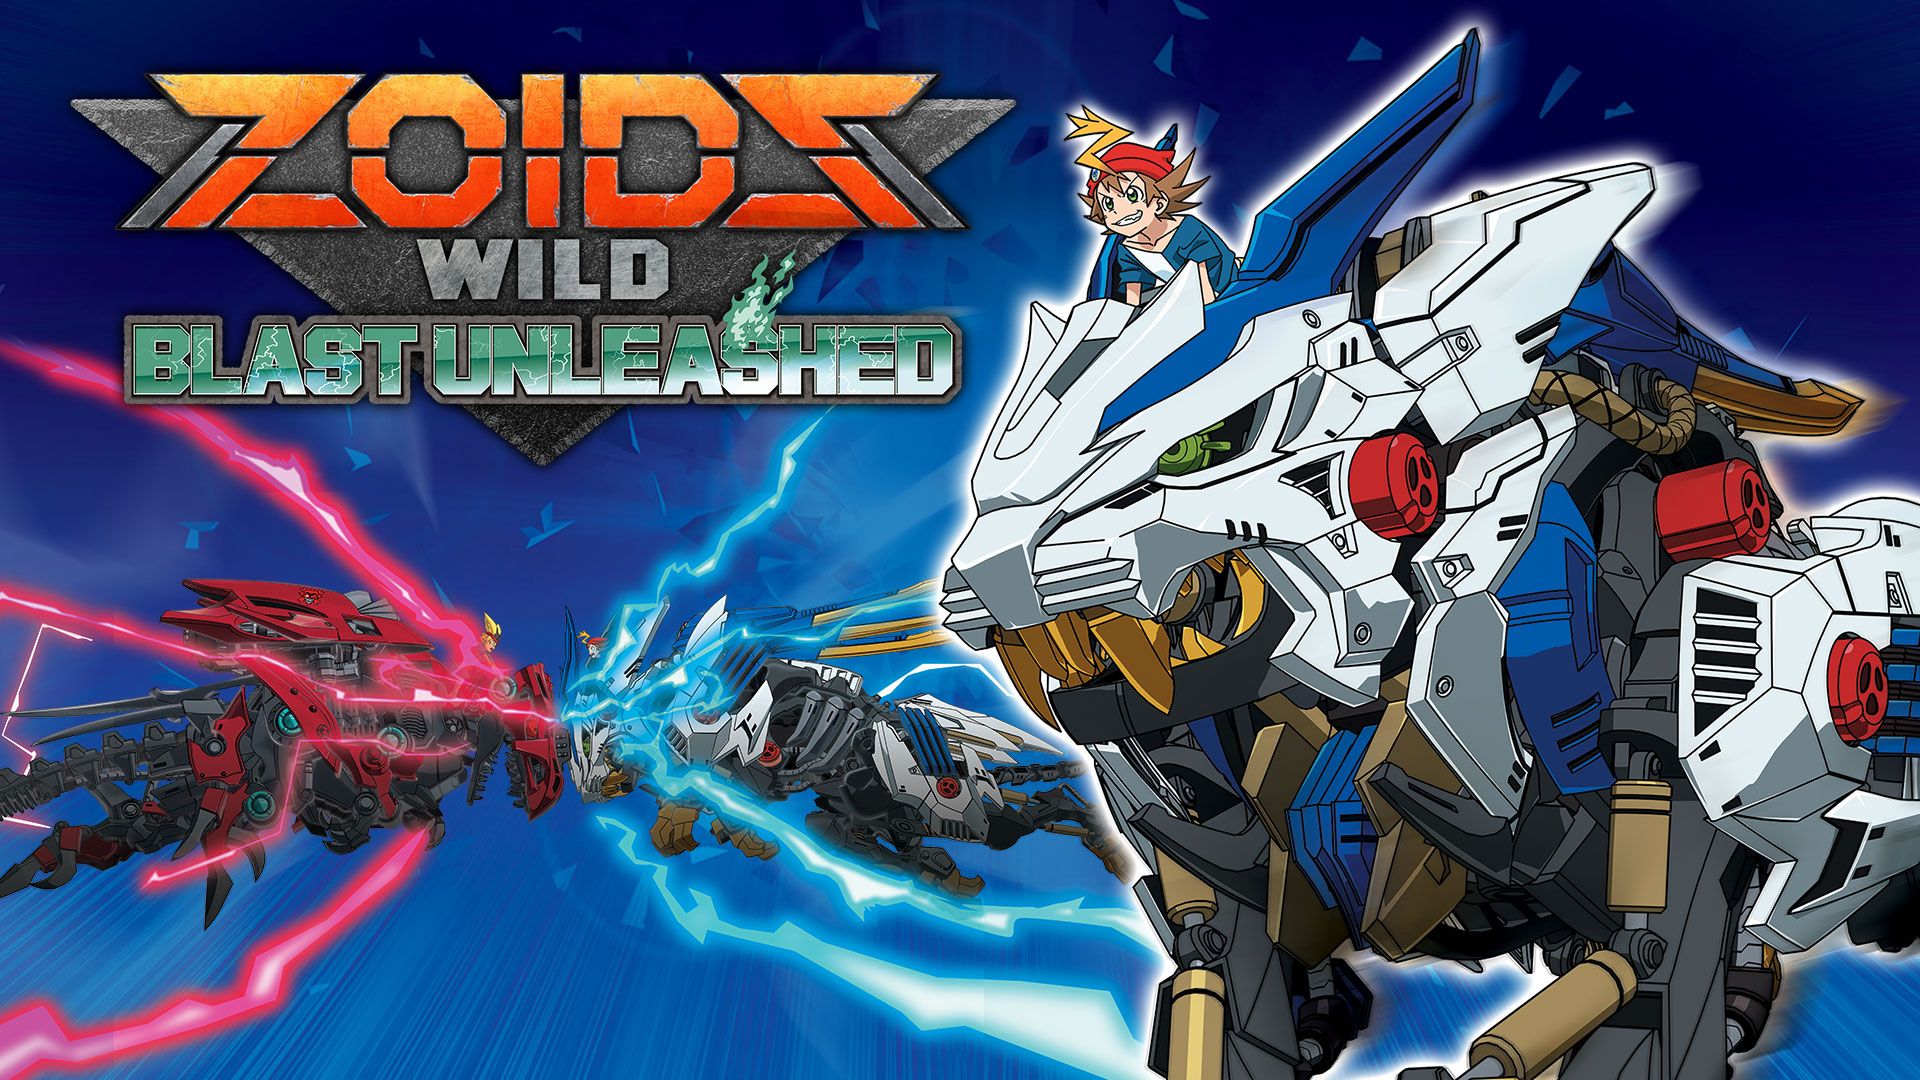 Review Zoids Wild: Blast Unleashed (Nintendo Switch)